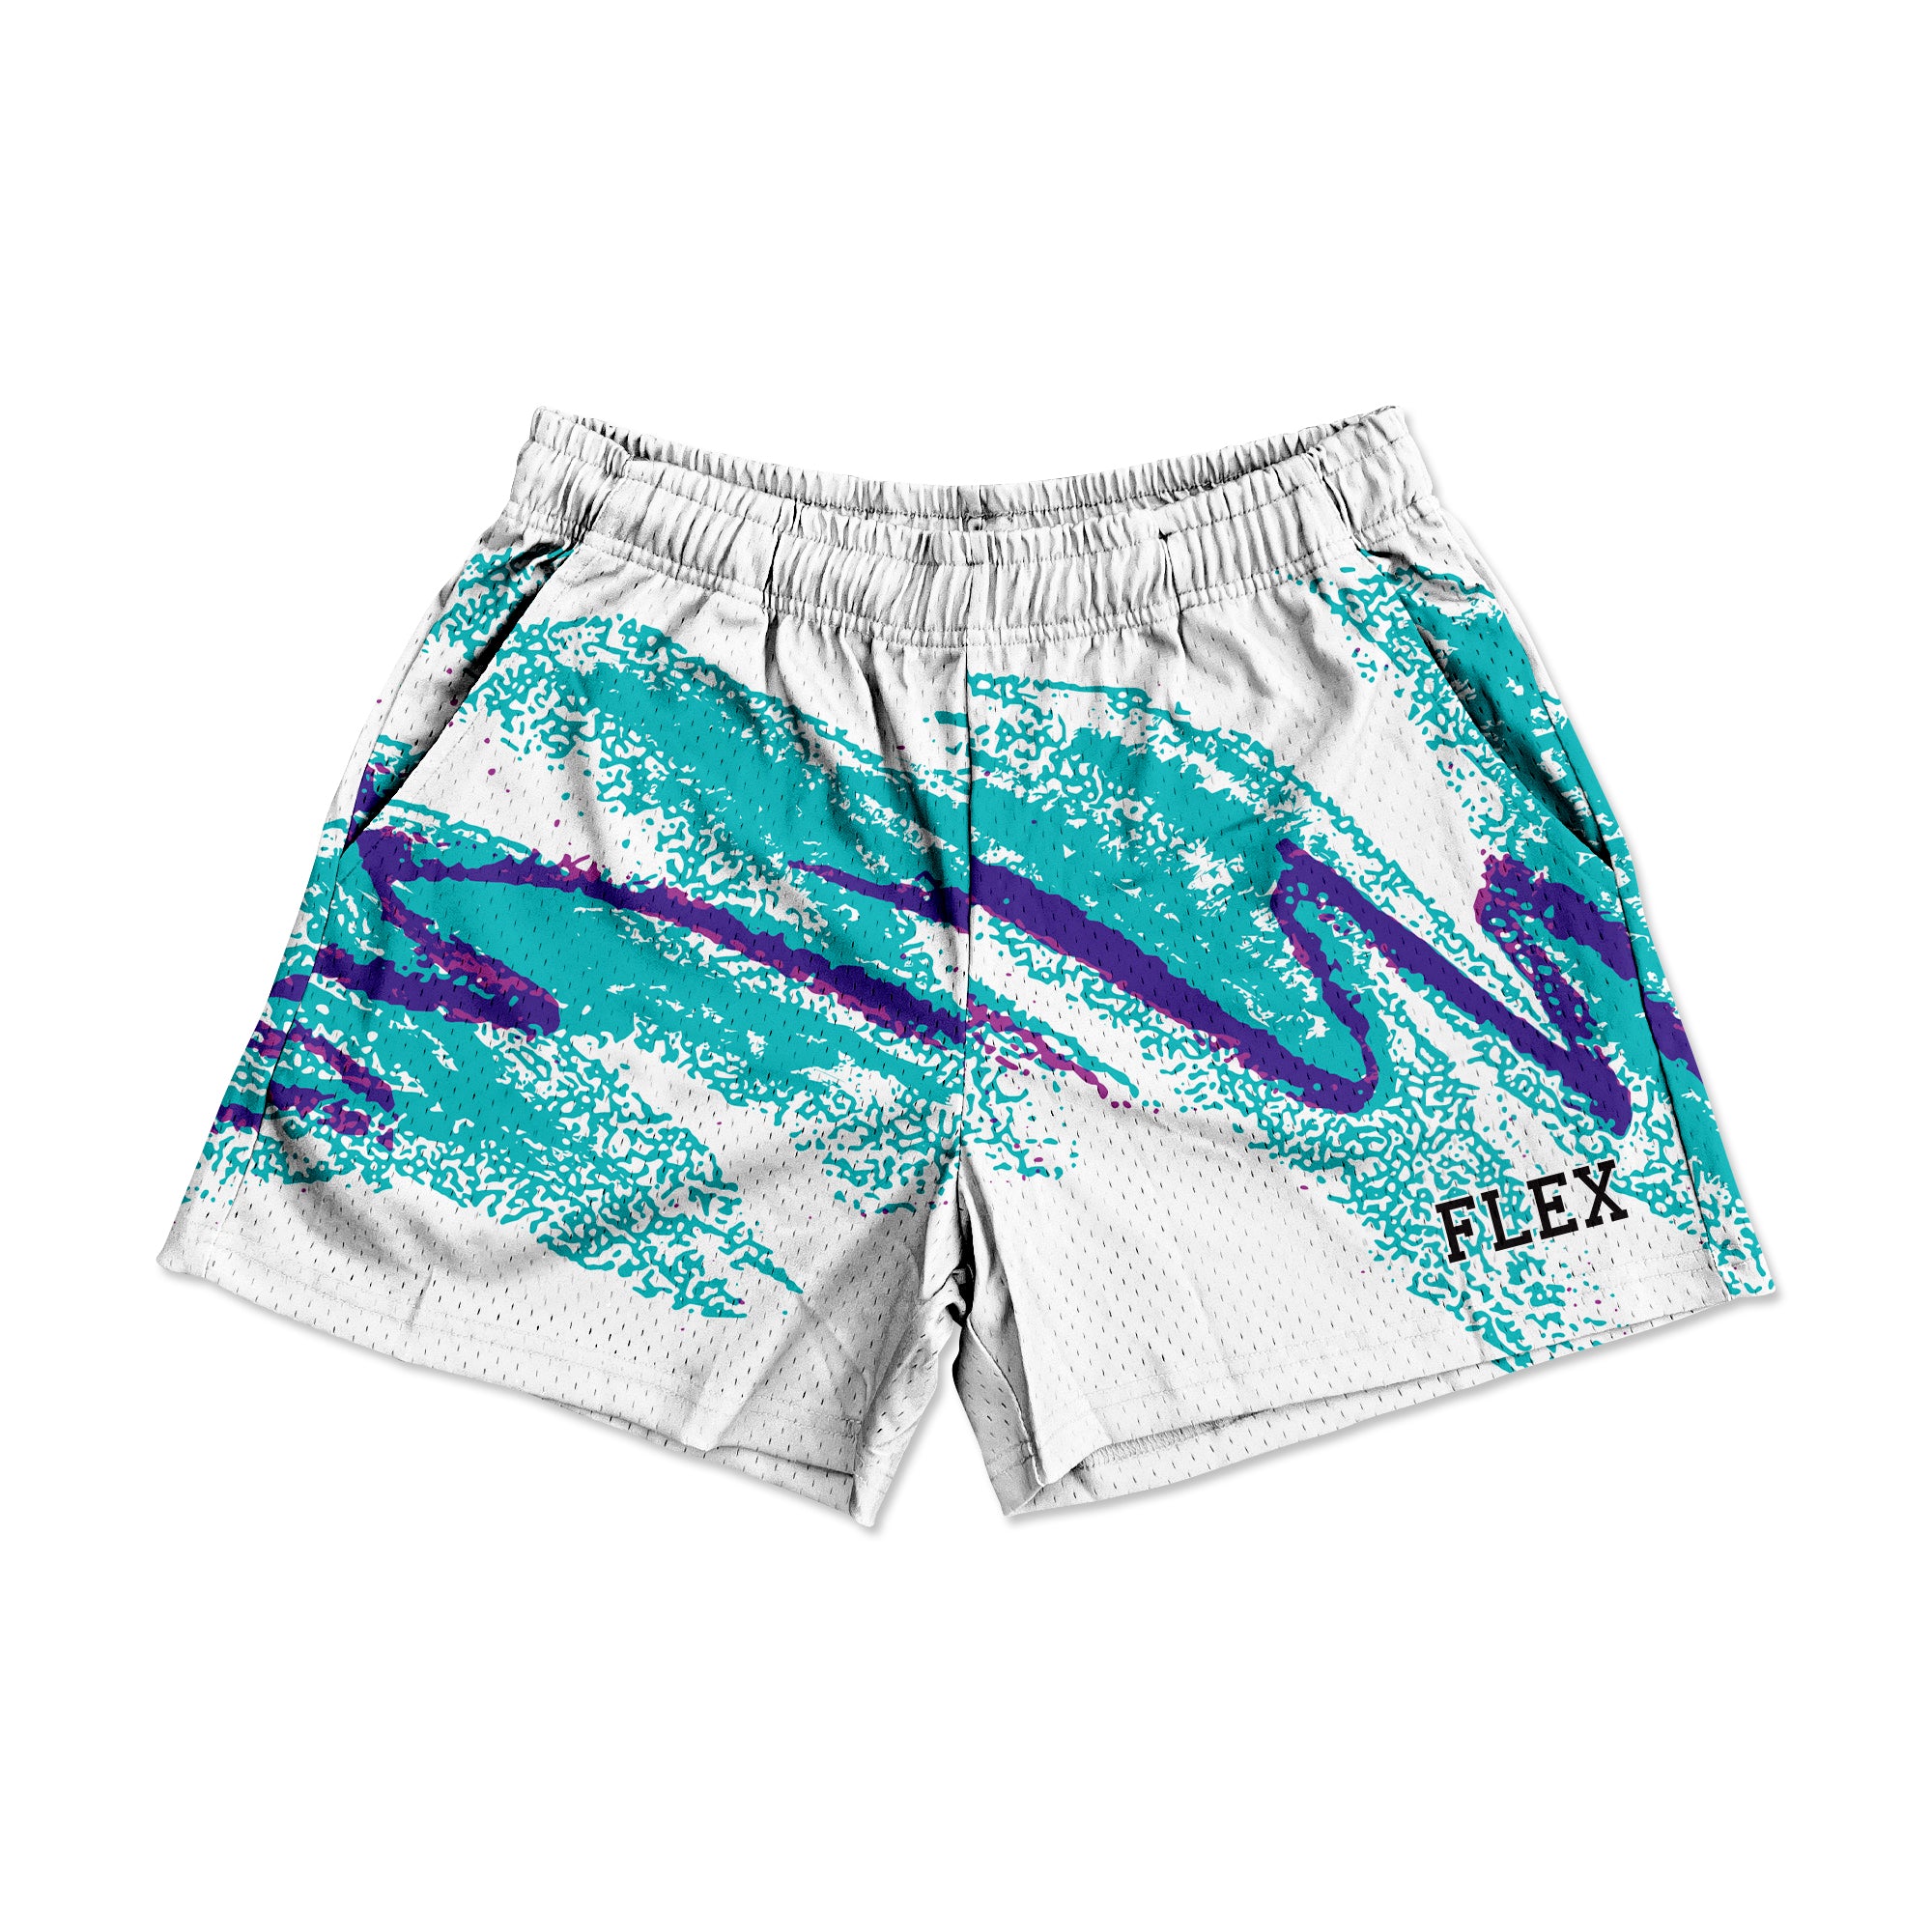 mesh-flex-shorts-5-90s-cup